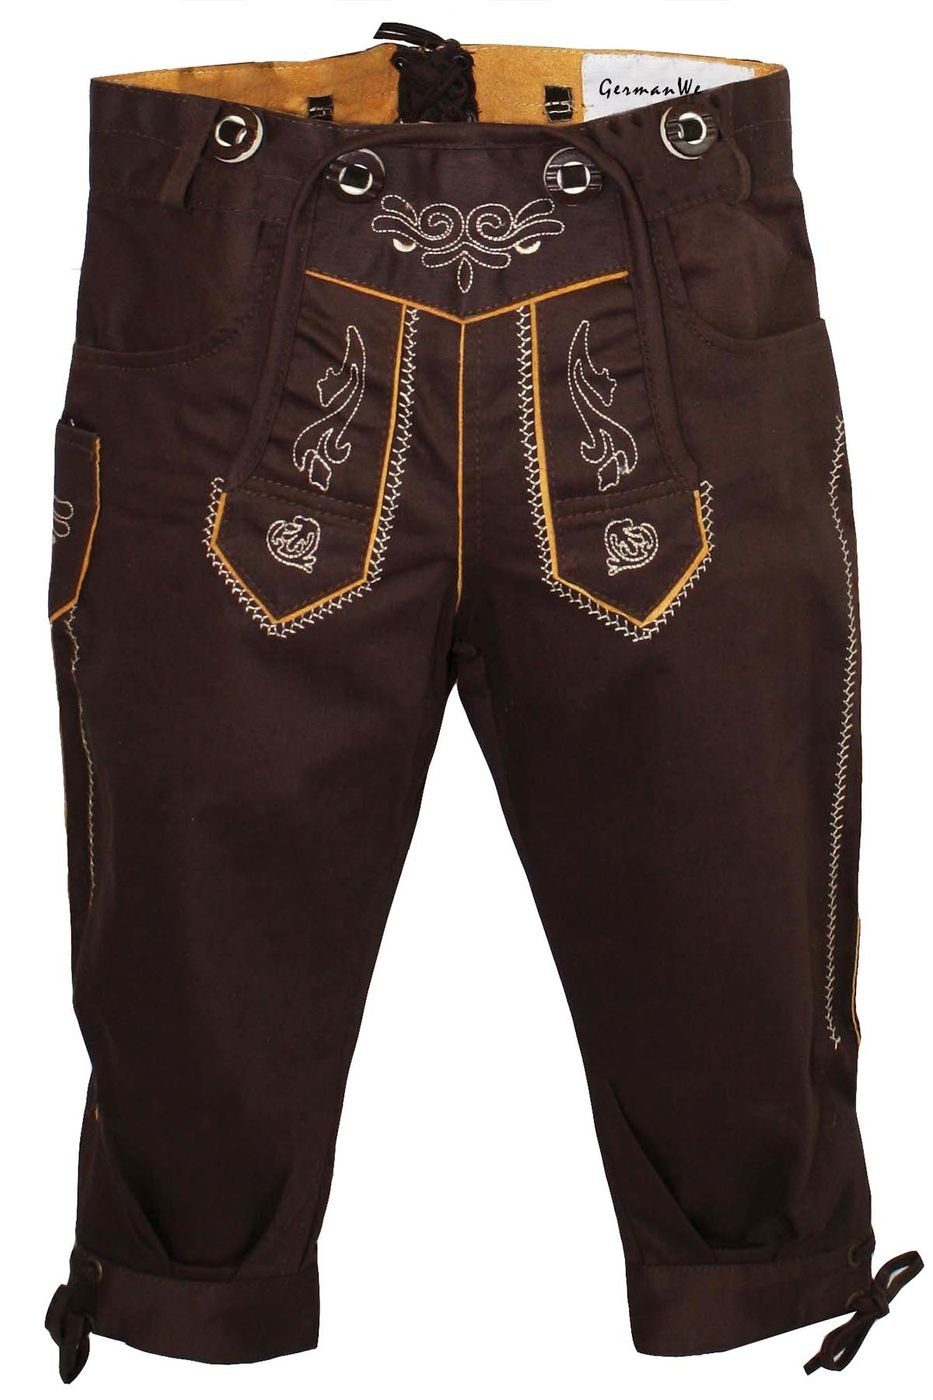 German Wear Trachtenhose Trachen GW901-Textil Hosenträgern Jeanshose mit Dunkelbraun Kinder